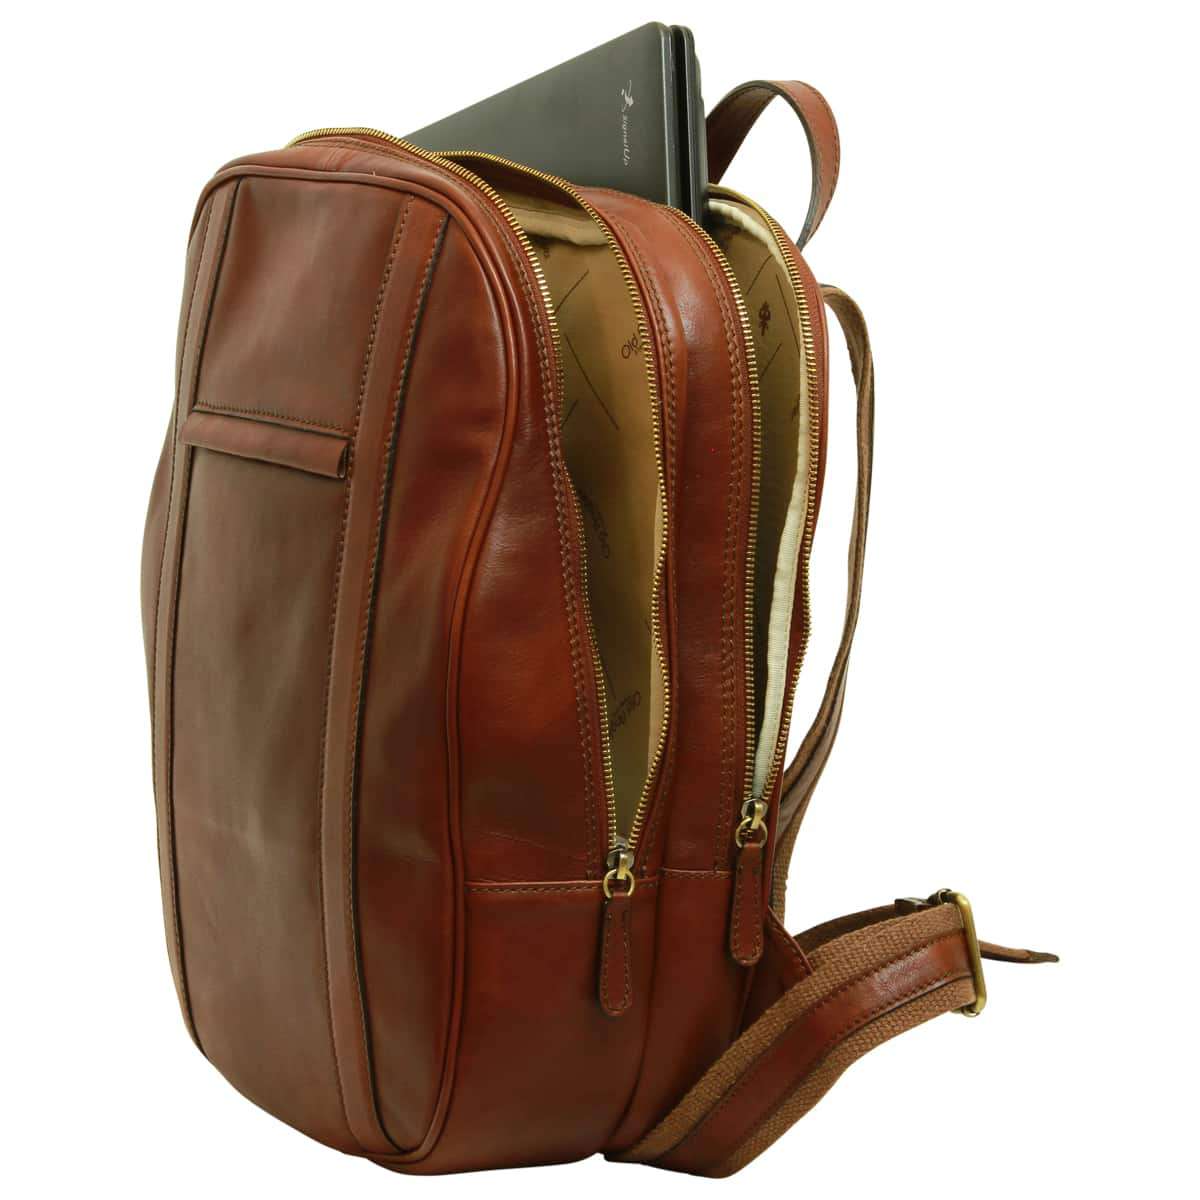 Soft Calfskin Leather Laptop Backpack - Brown | 031491MA UK | Old Angler Firenze